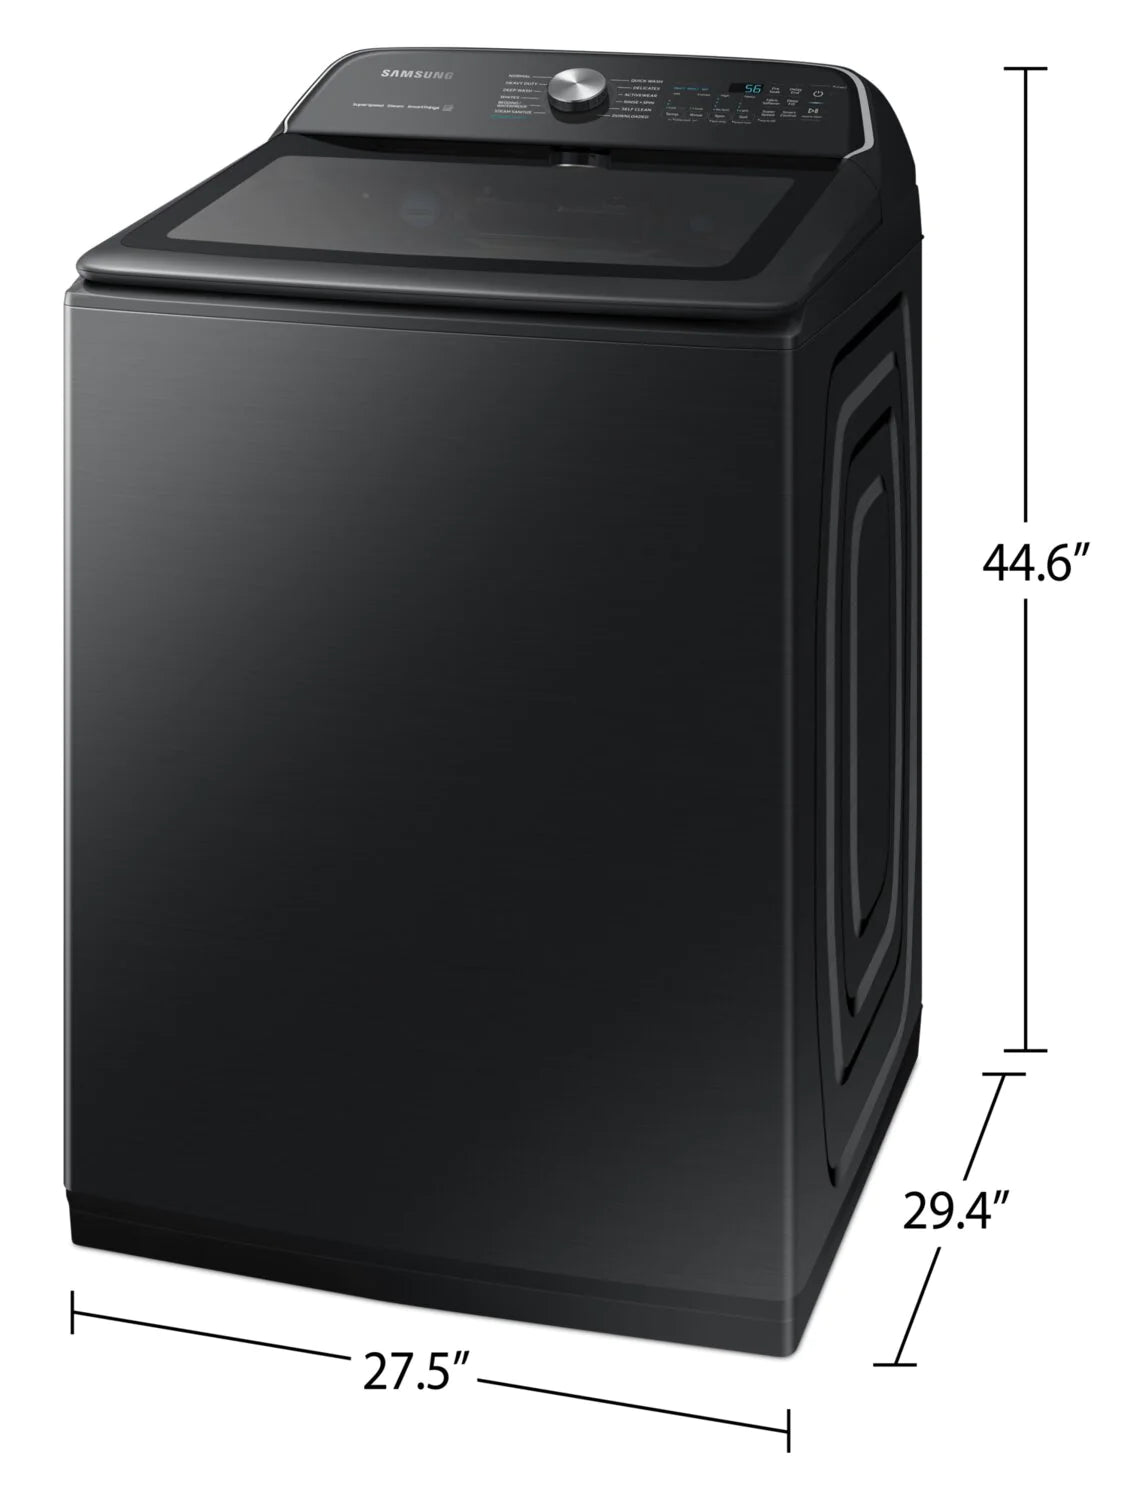 Samsung Washer 27" Black Stainless Steel WA52B7650AV